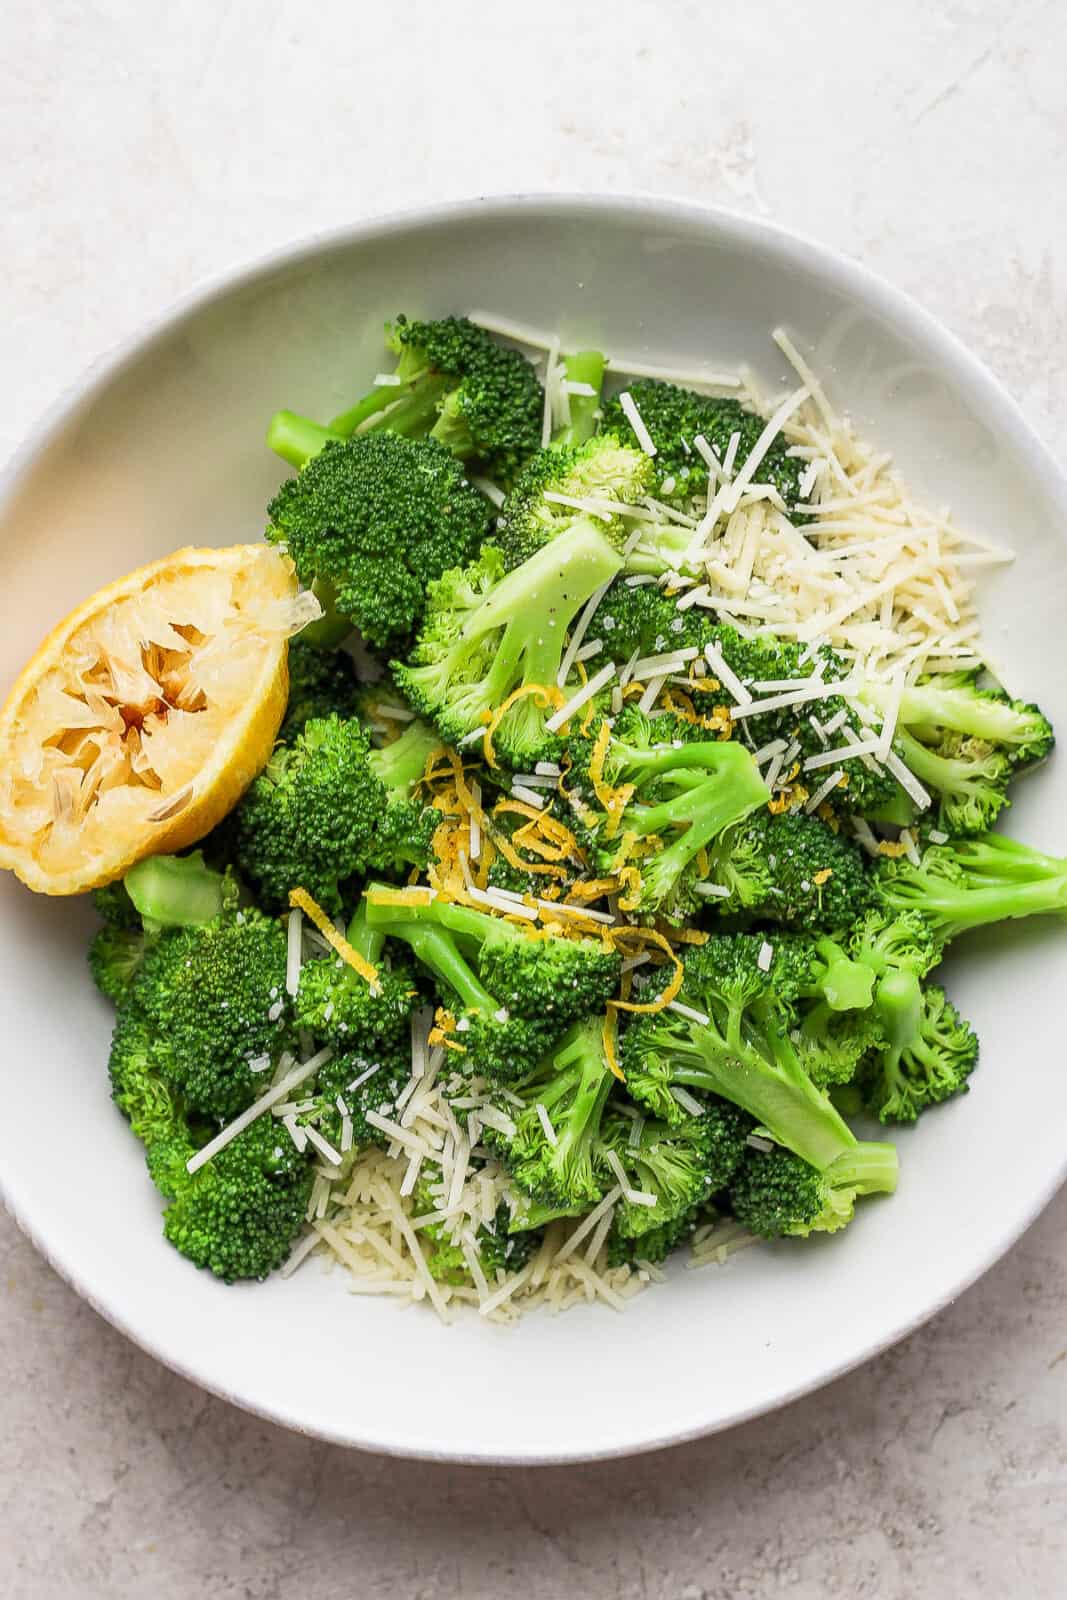 Bowl of parmesan broccoli with a lemon wedge.